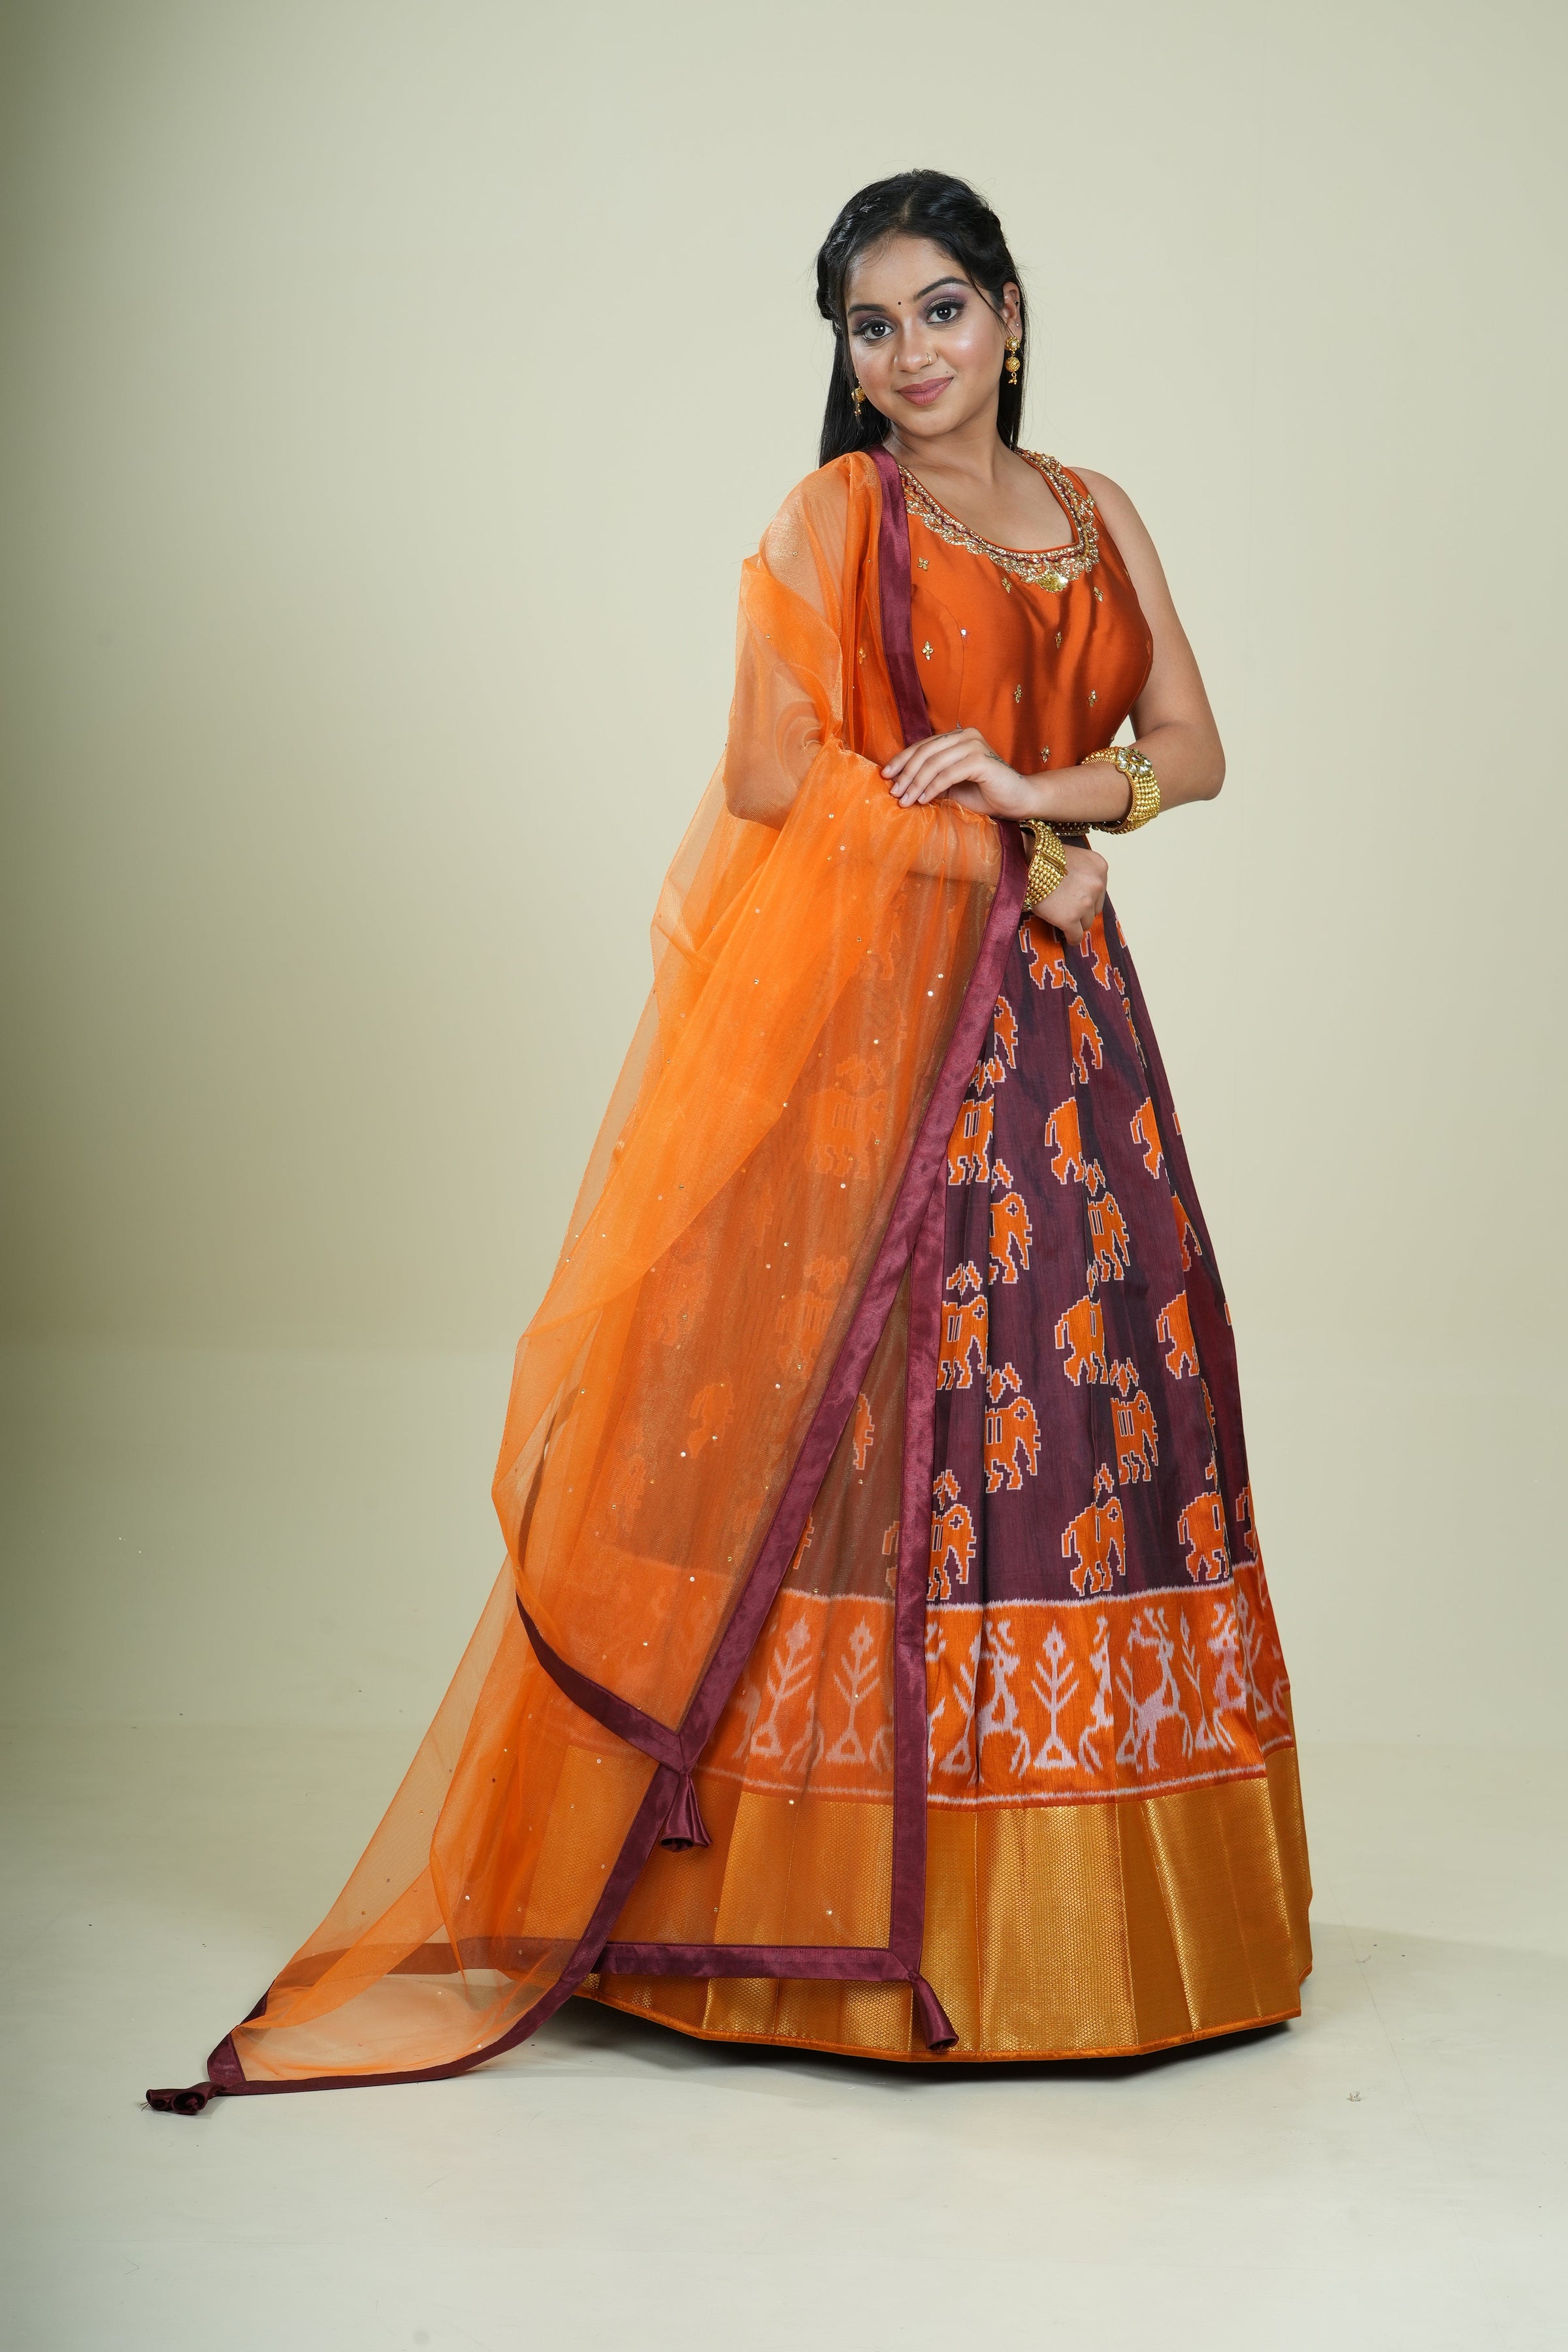 Girlish gown by half saree studio